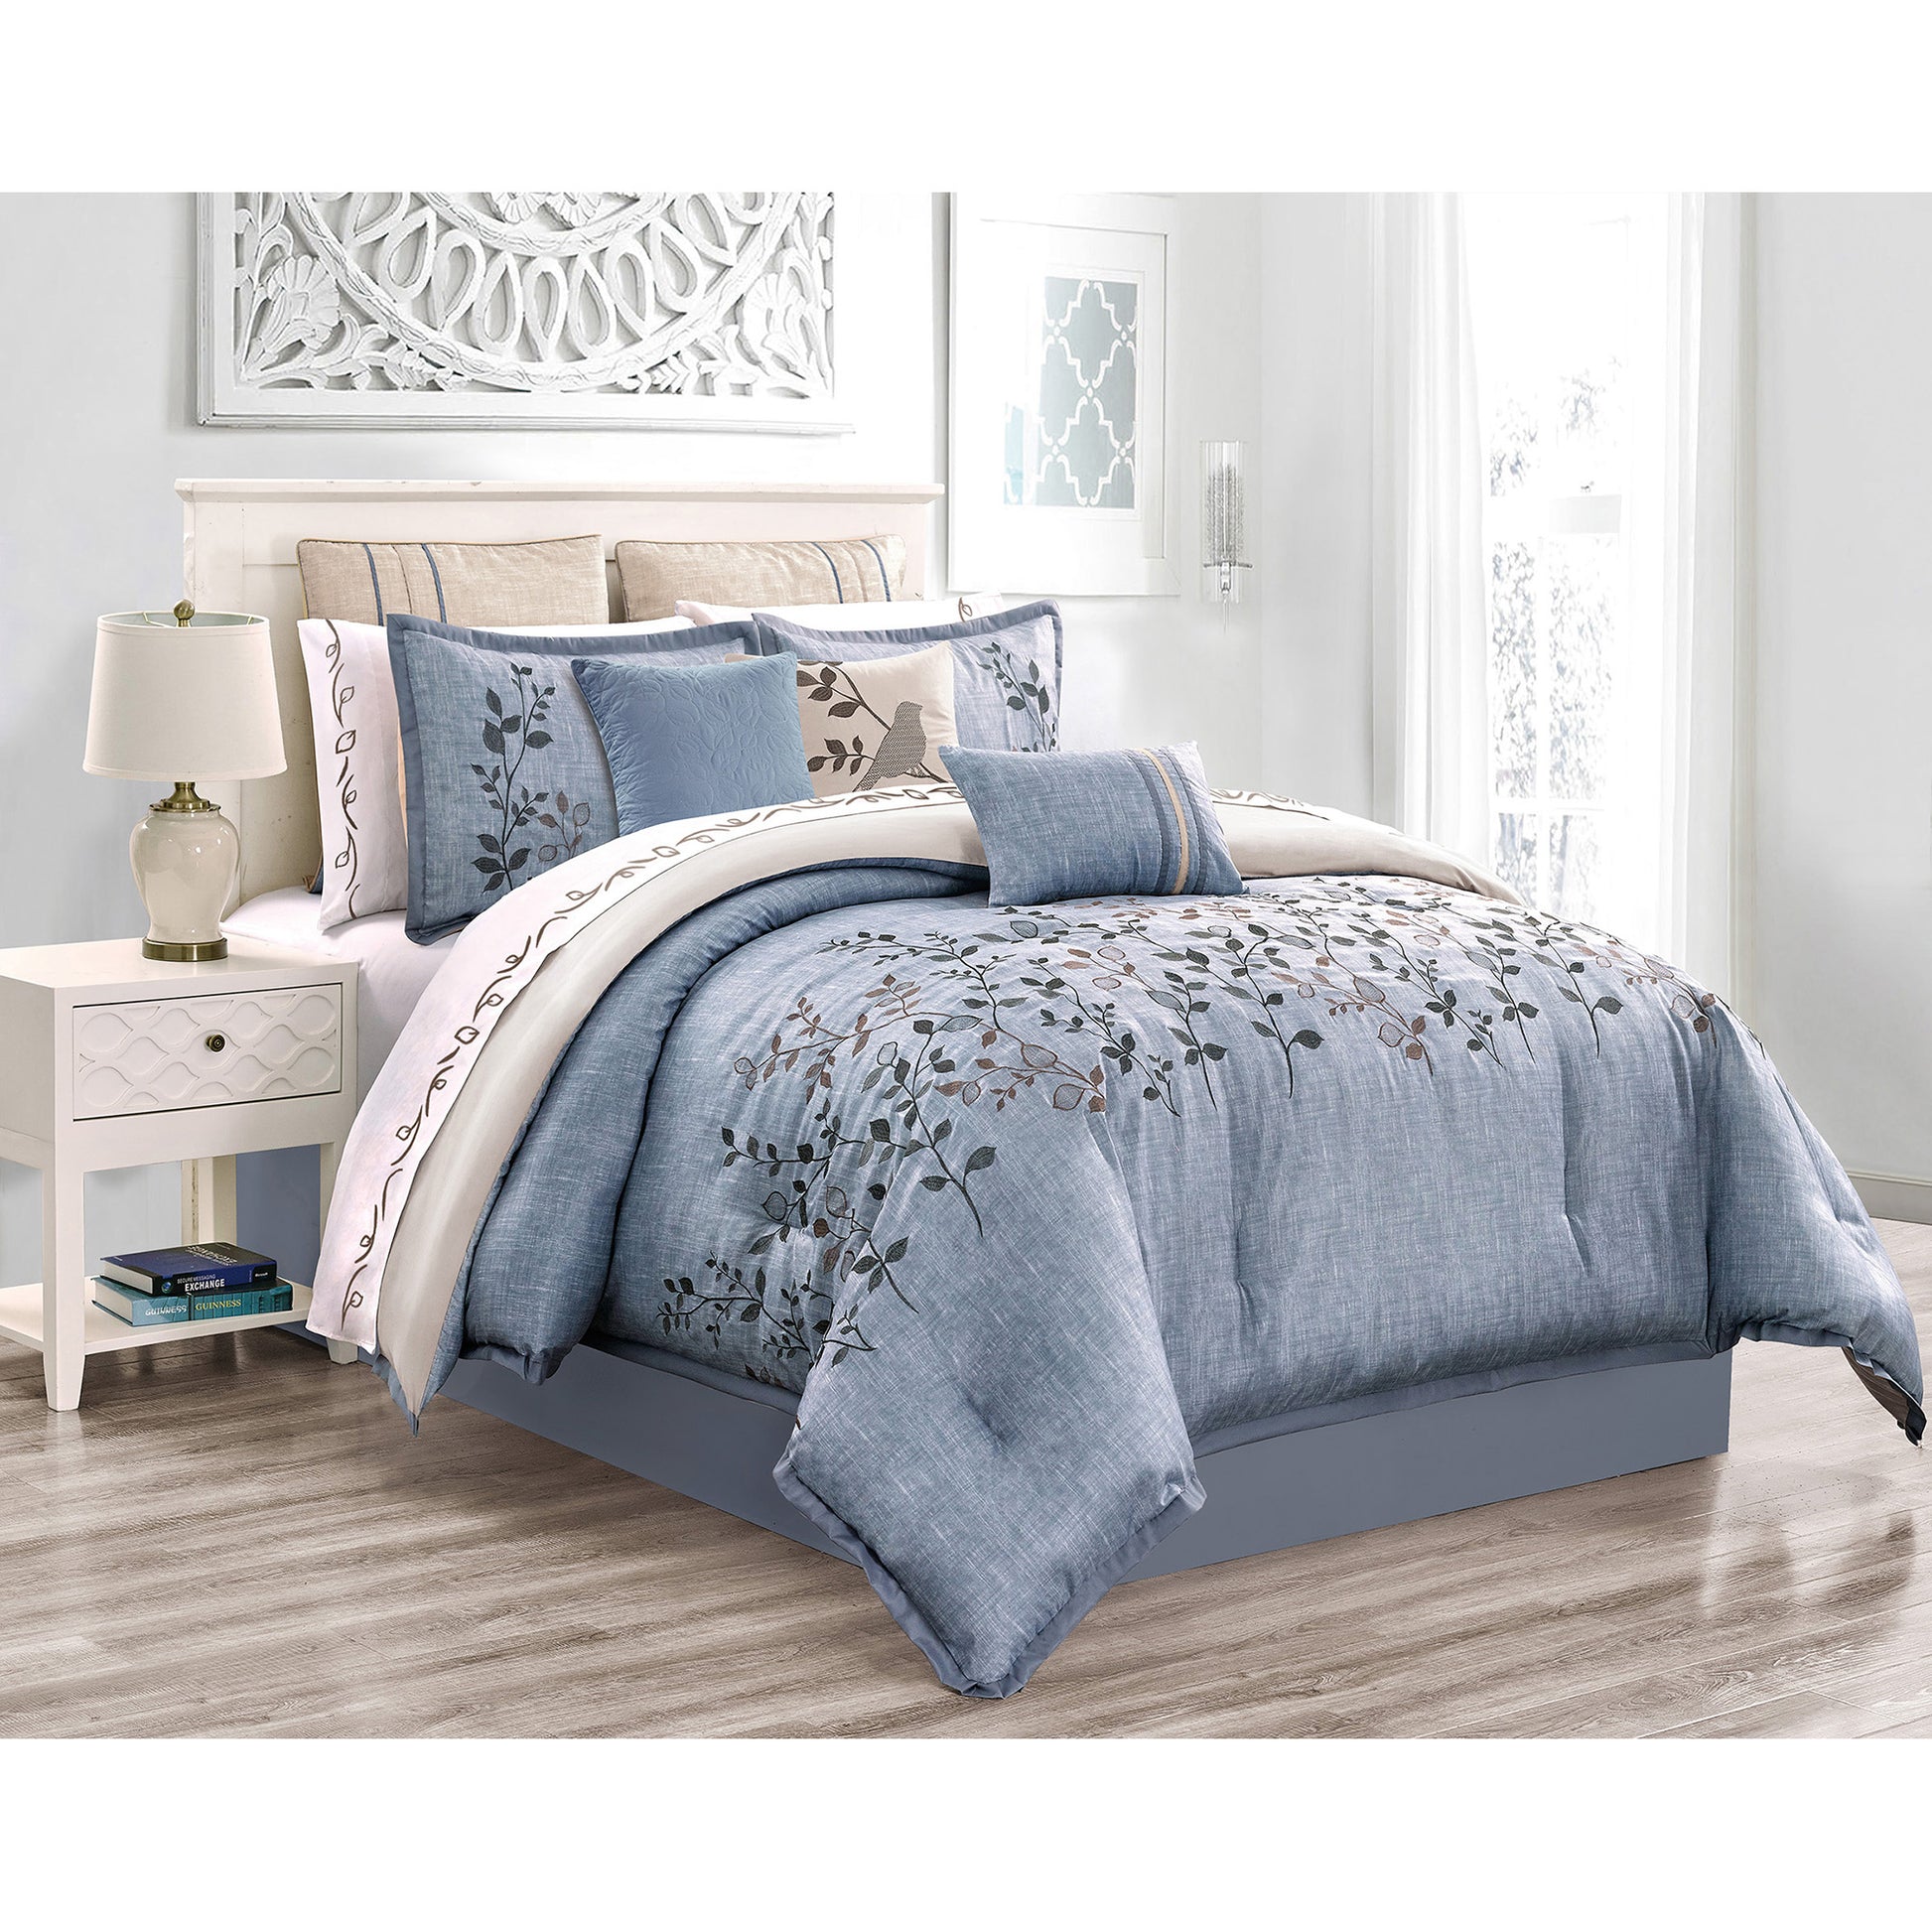 Woven Comforter Bedding Set 7Pcs Queen Enya